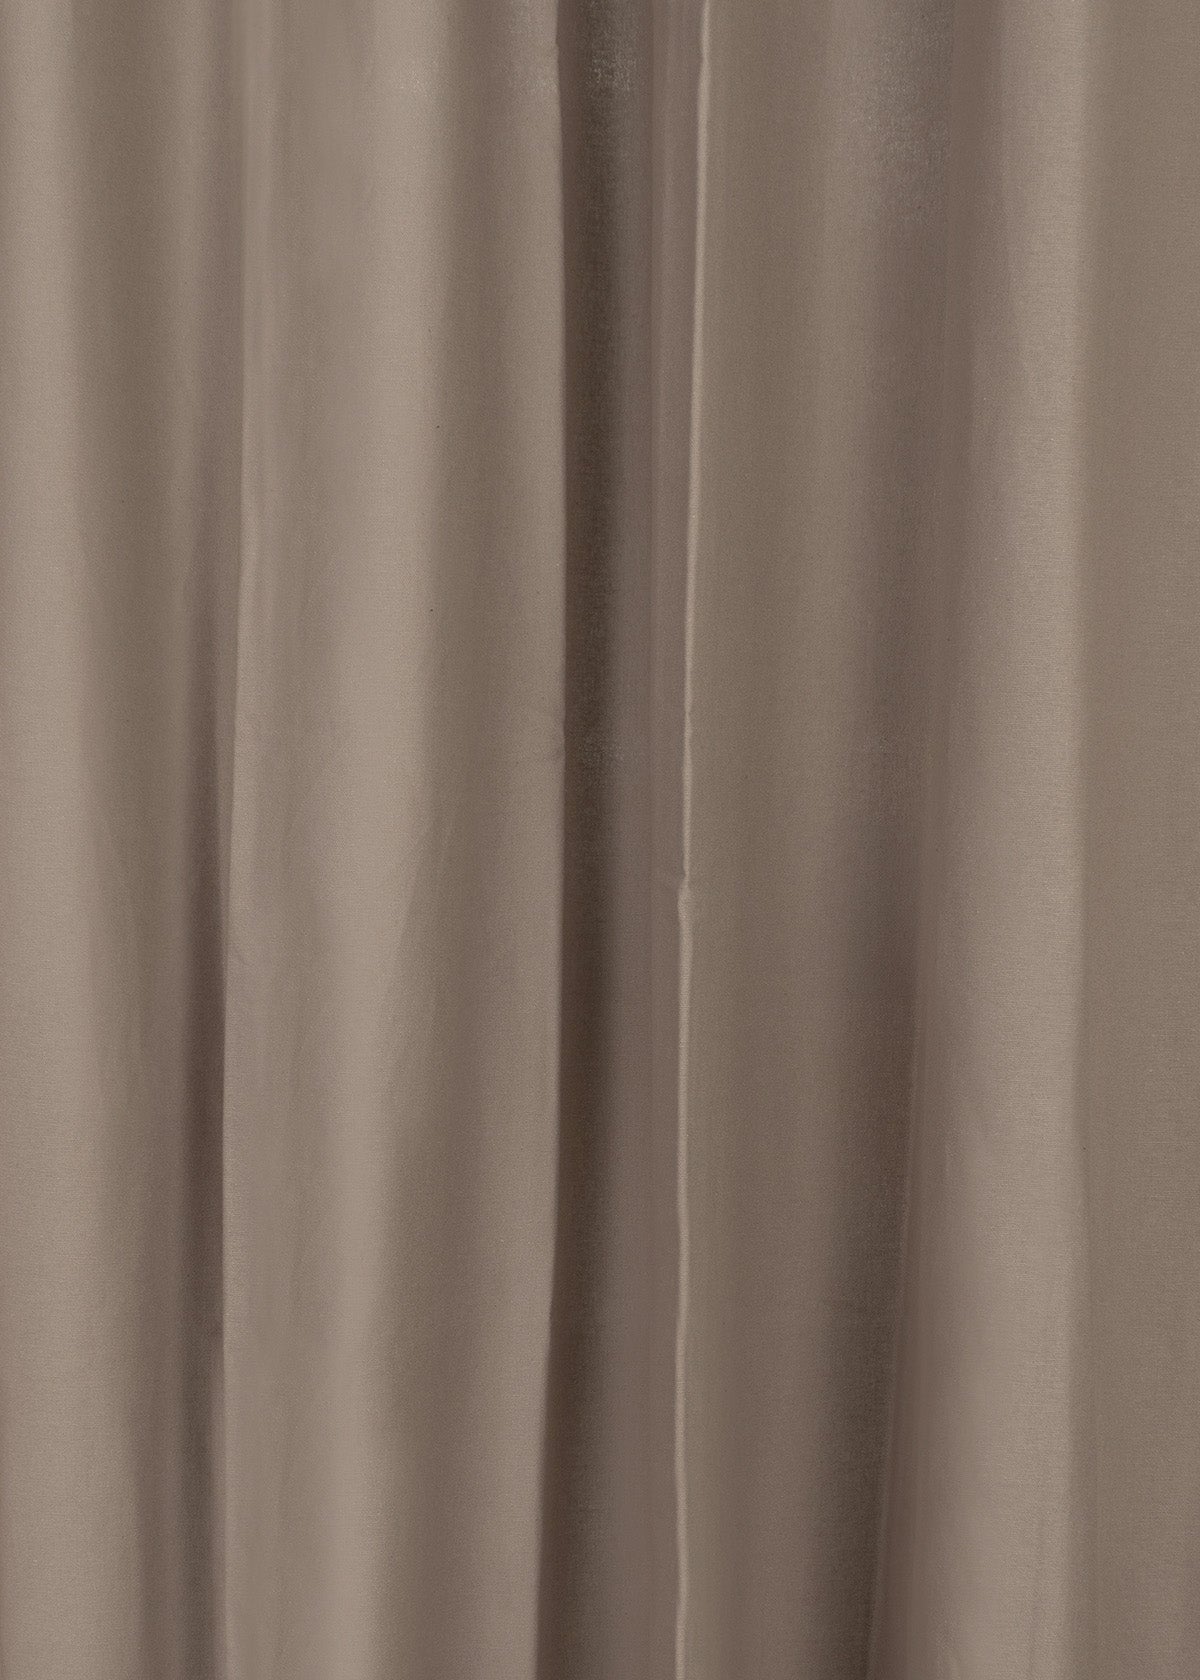 Solid Walnut grey 100% cotton plain curtain for bedroom - Room darkening - Pack of 1